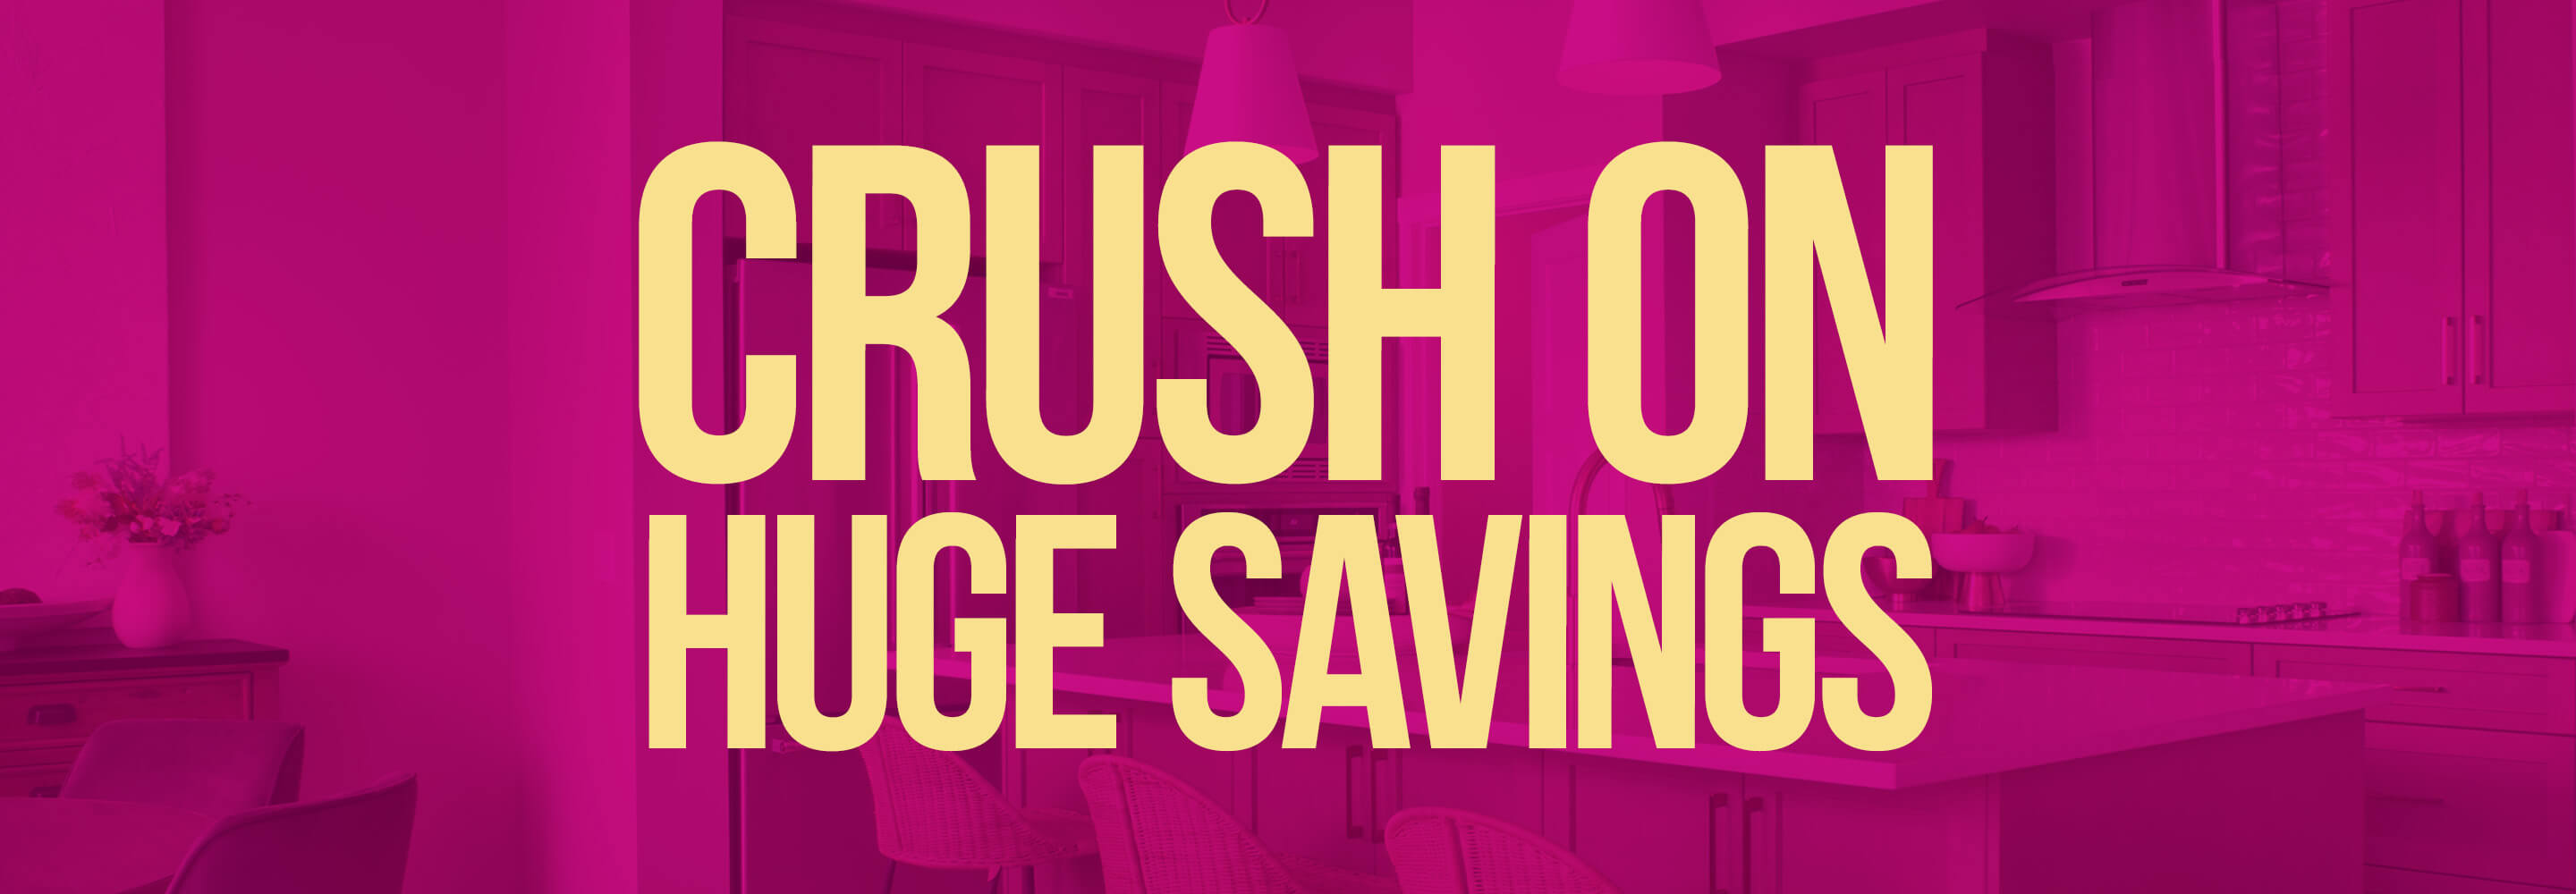 Crush on huge savings